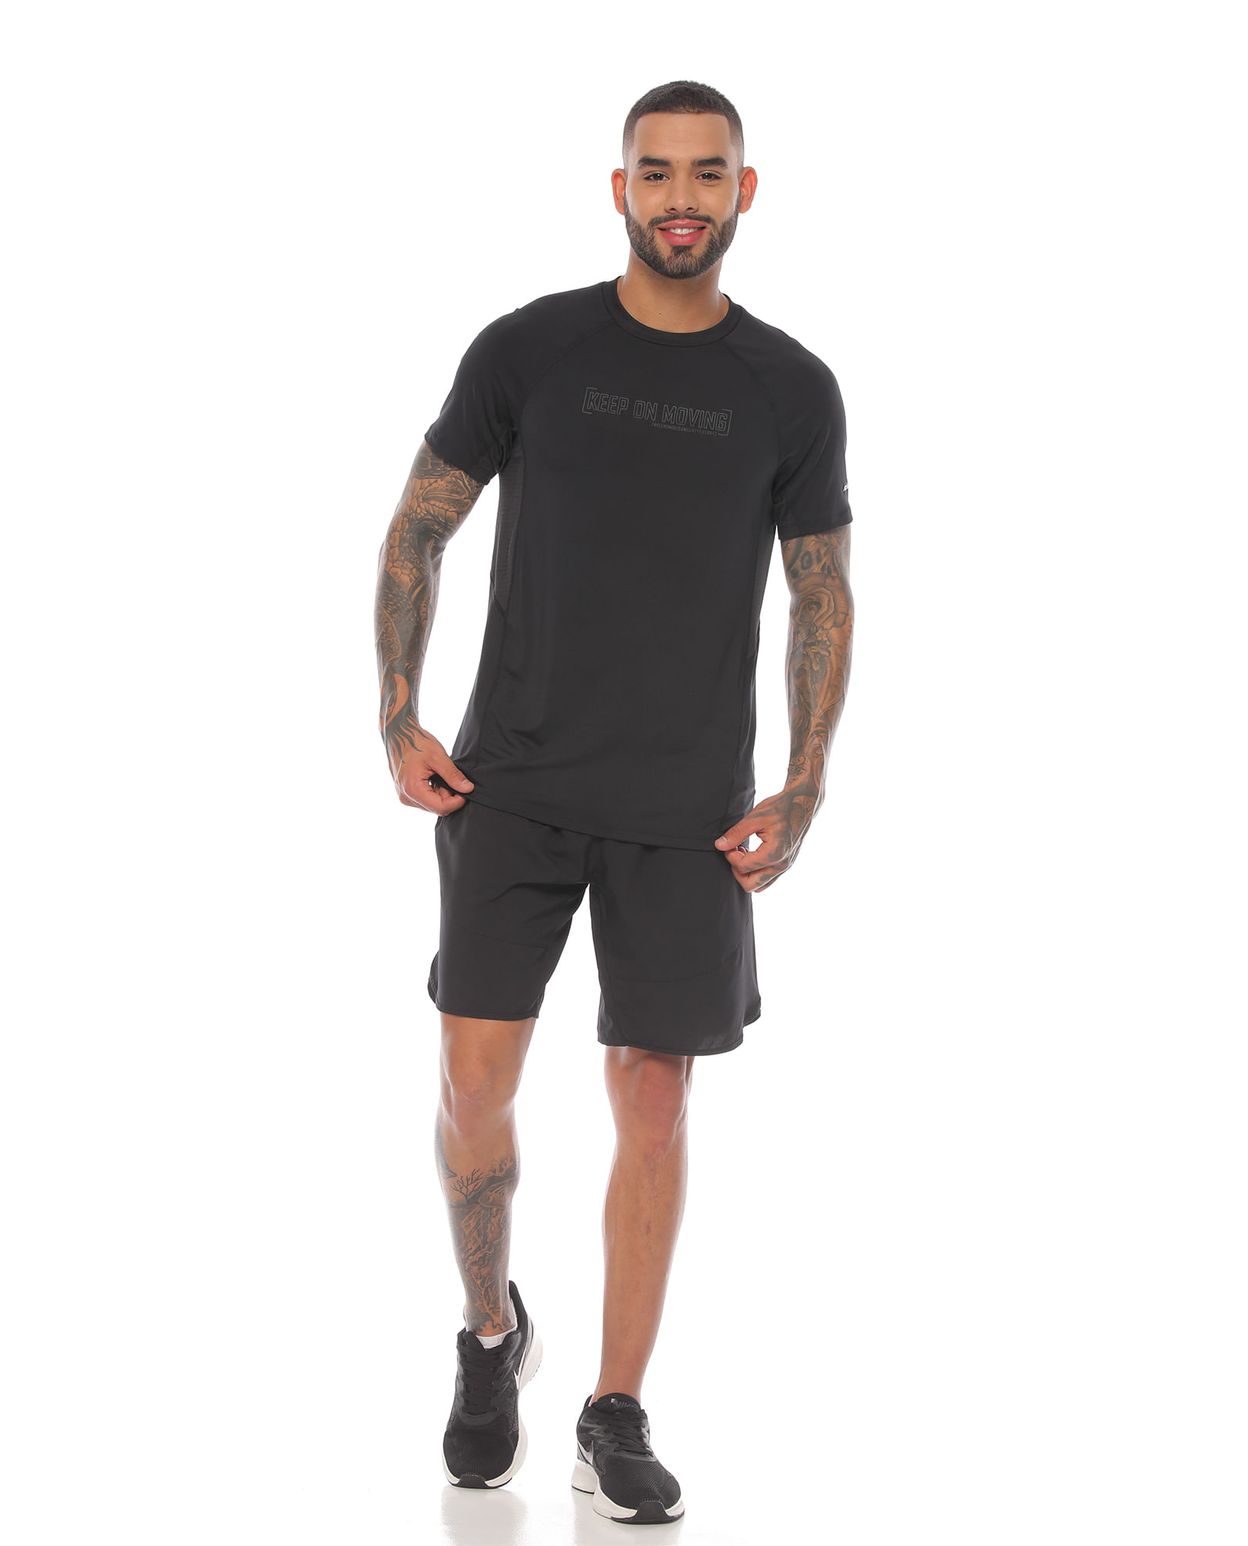 modelo con camiseta manga corta y pantaloneta deportiva color negro para hombre cuerpo completo